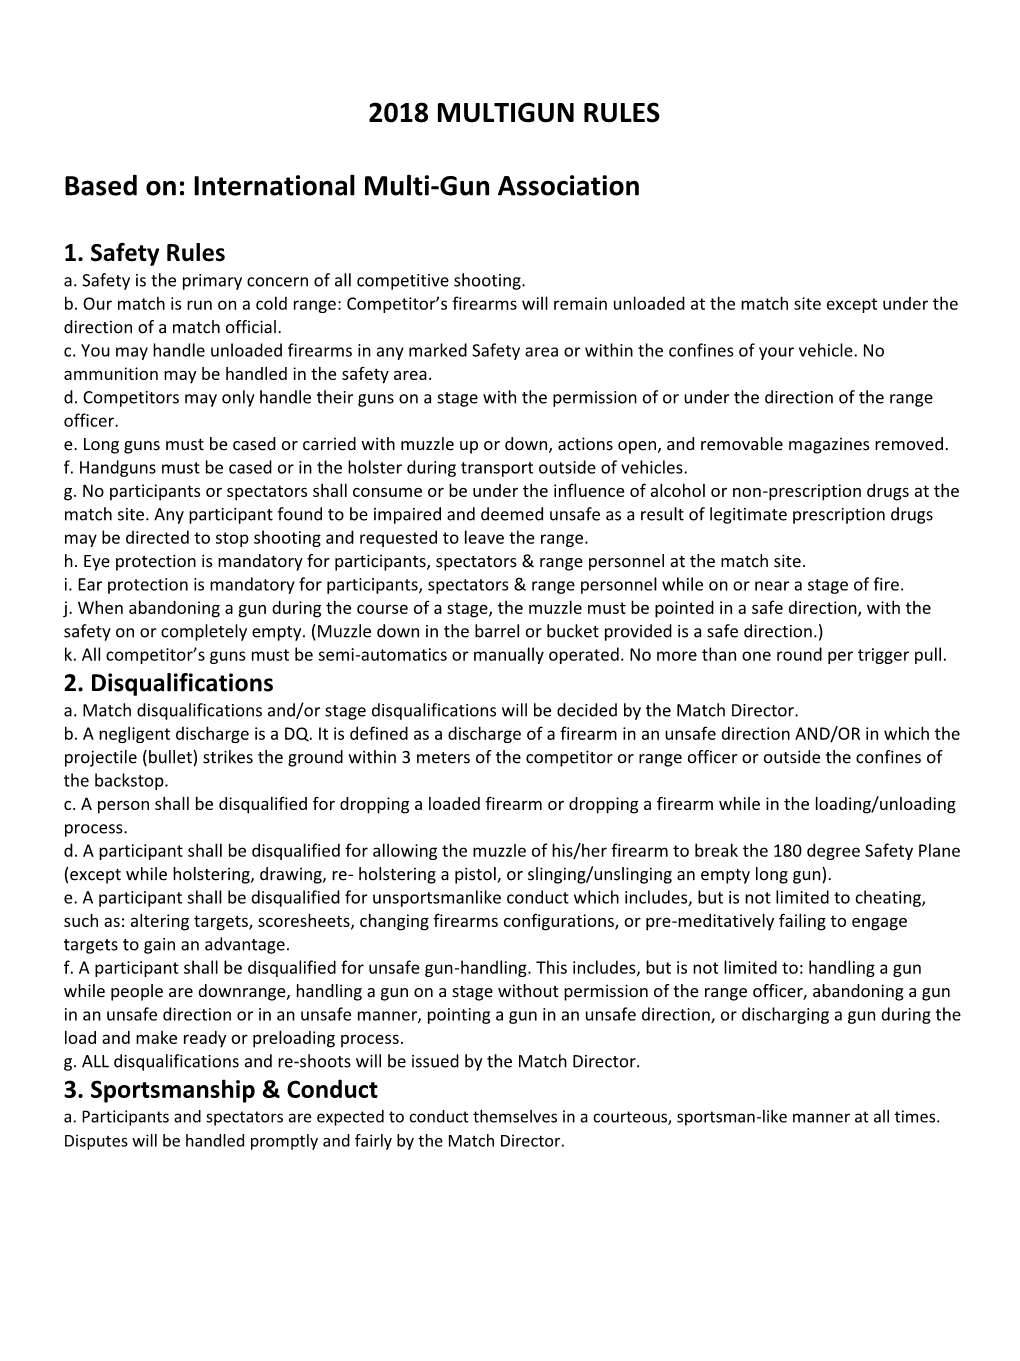 2018 MULTIGUN RULES Based On: International Multi-Gun Association